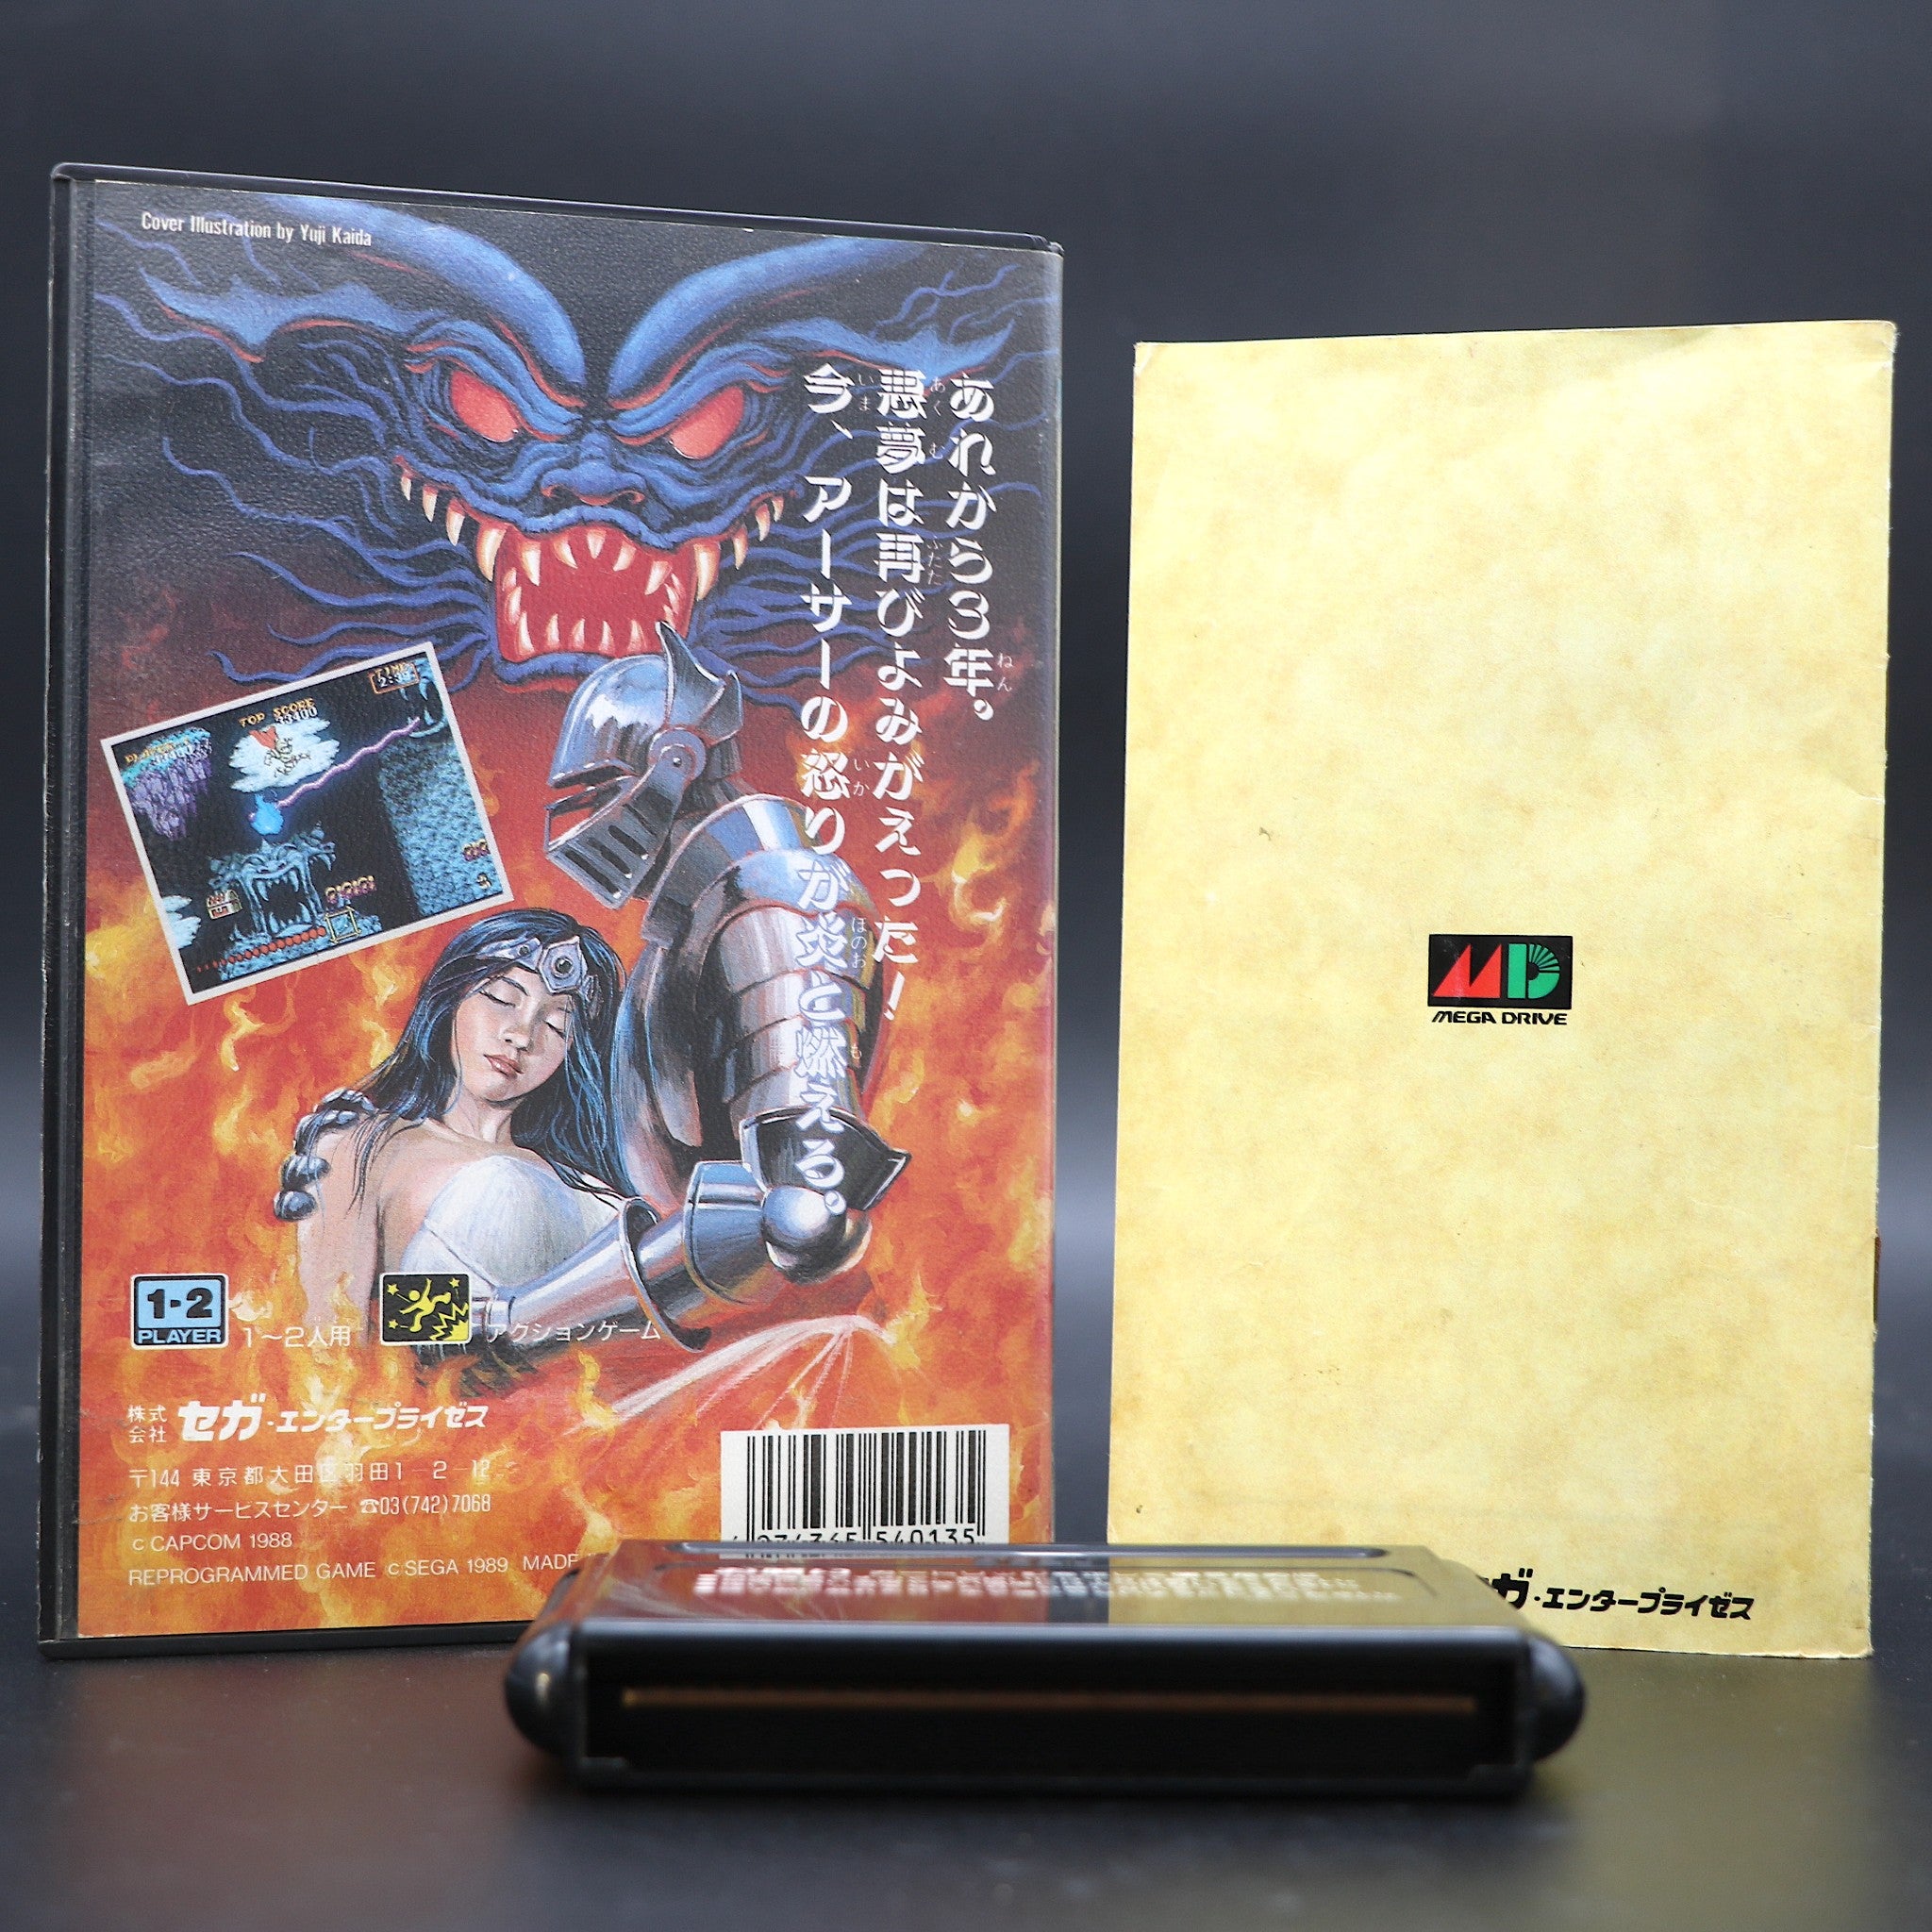 Daimakaimura - Sega Mega Drive Game - Japanese Version - Boxed & Complete